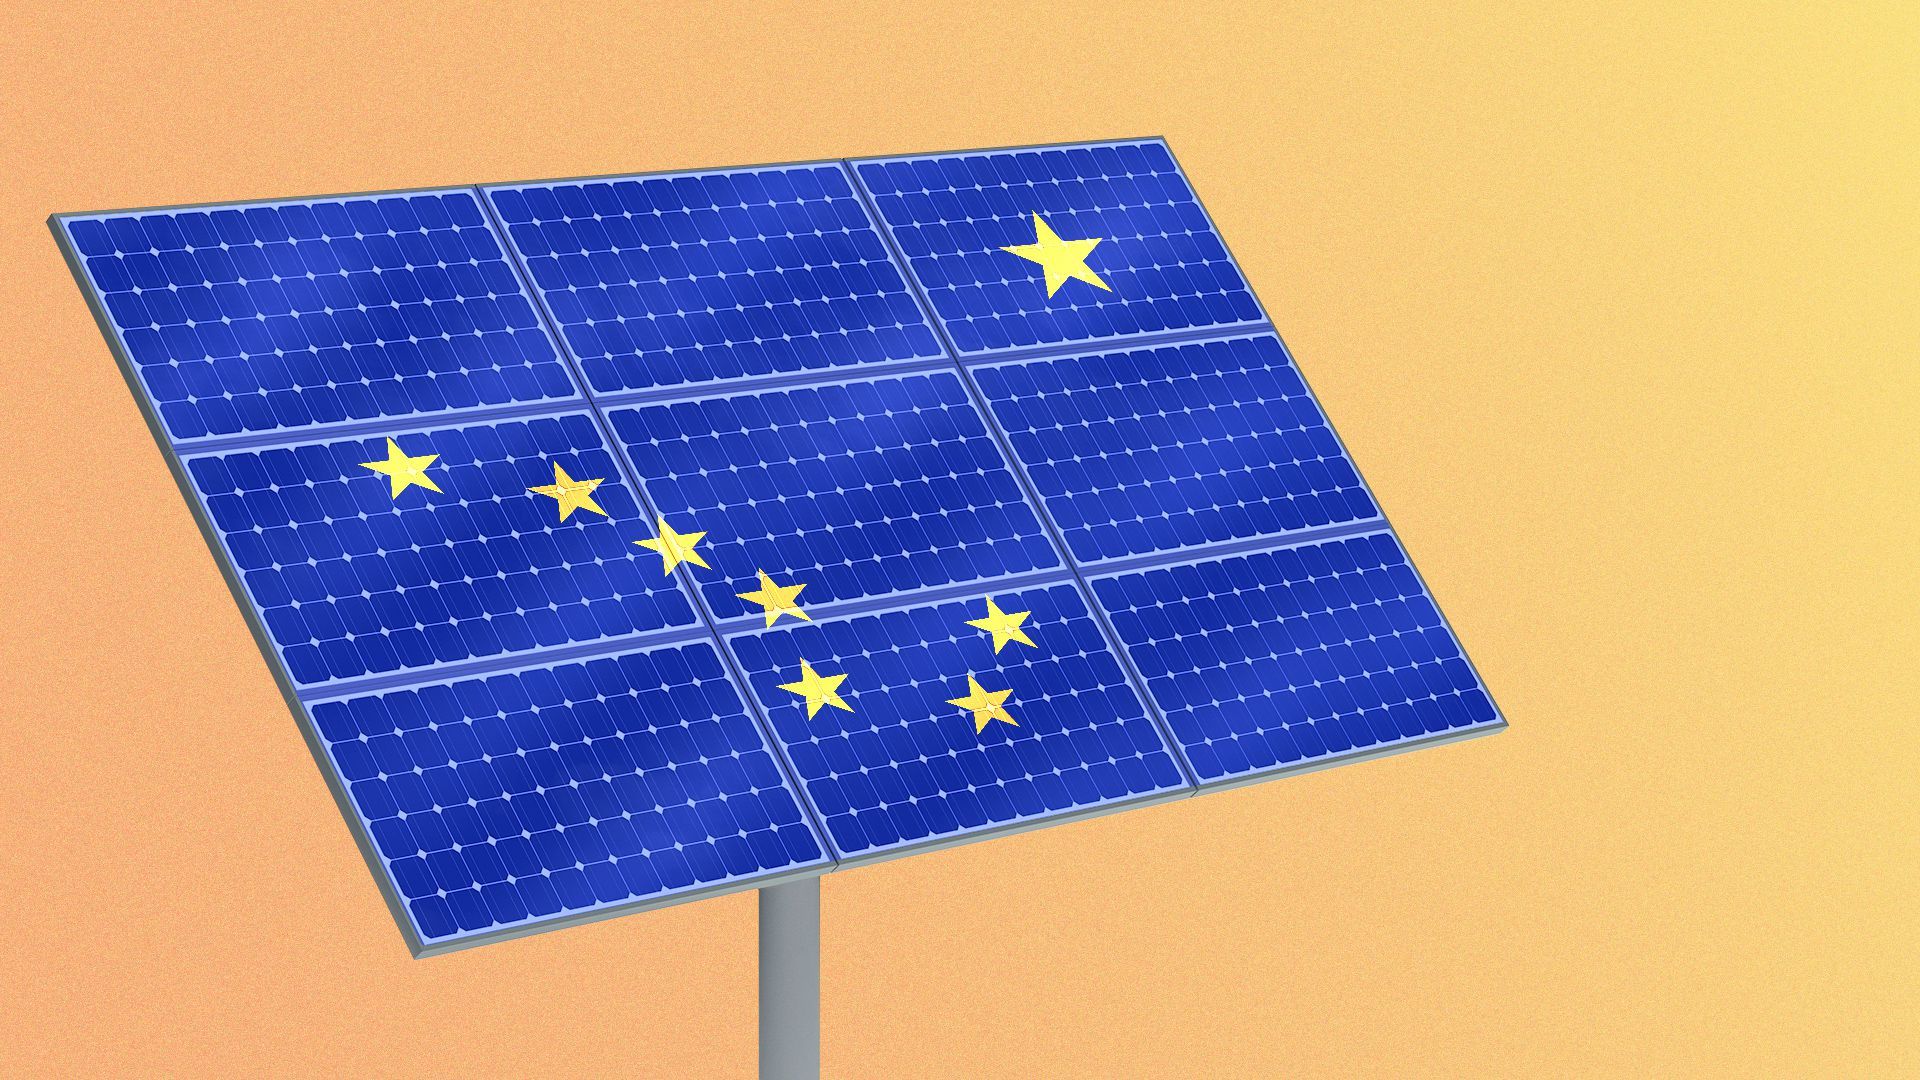 Illustration of a solar panel with the flag of Alaska overlaid.